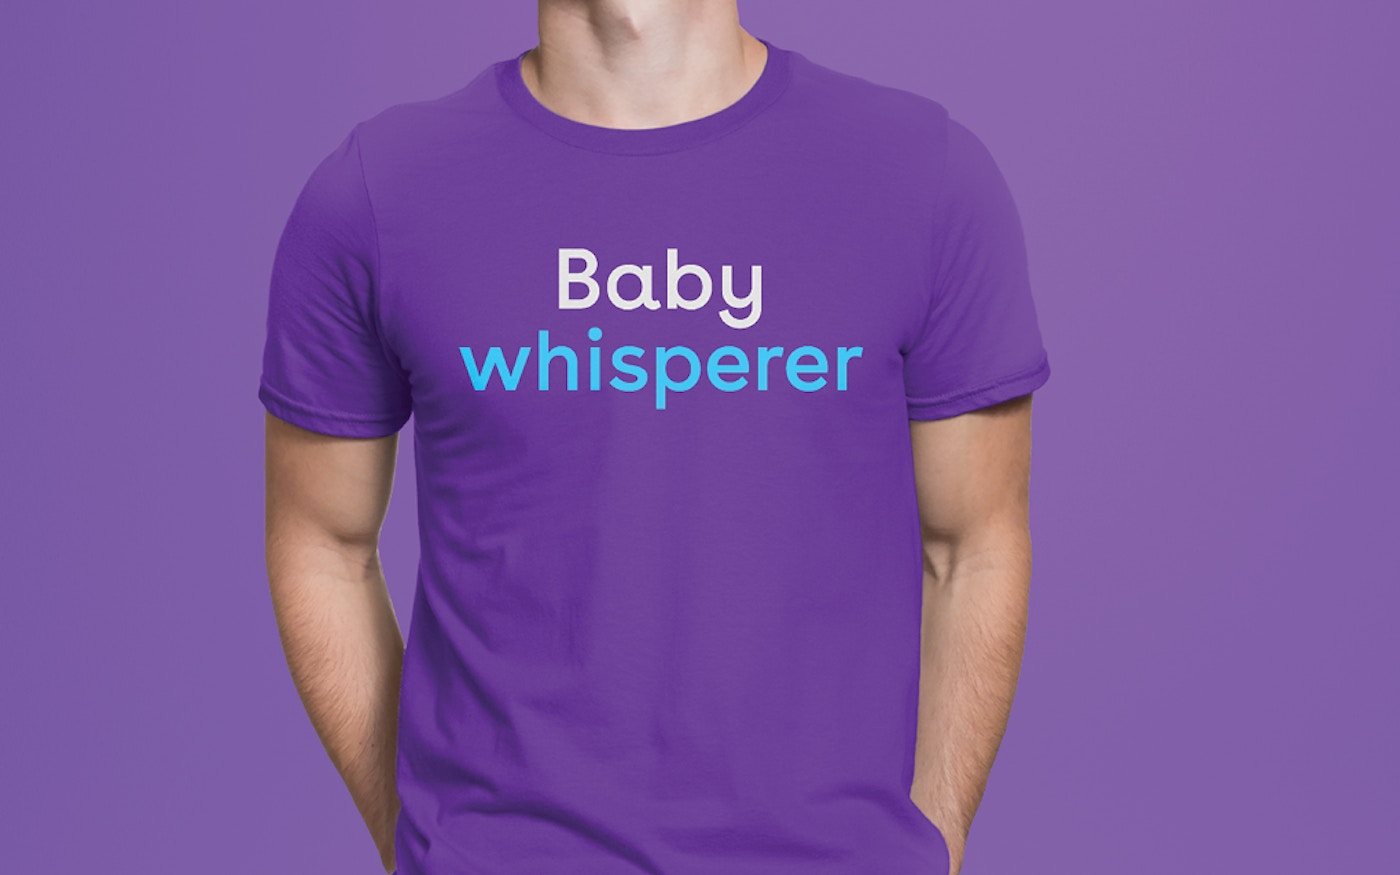 Babies R Us "Baby Whisperer" Tee